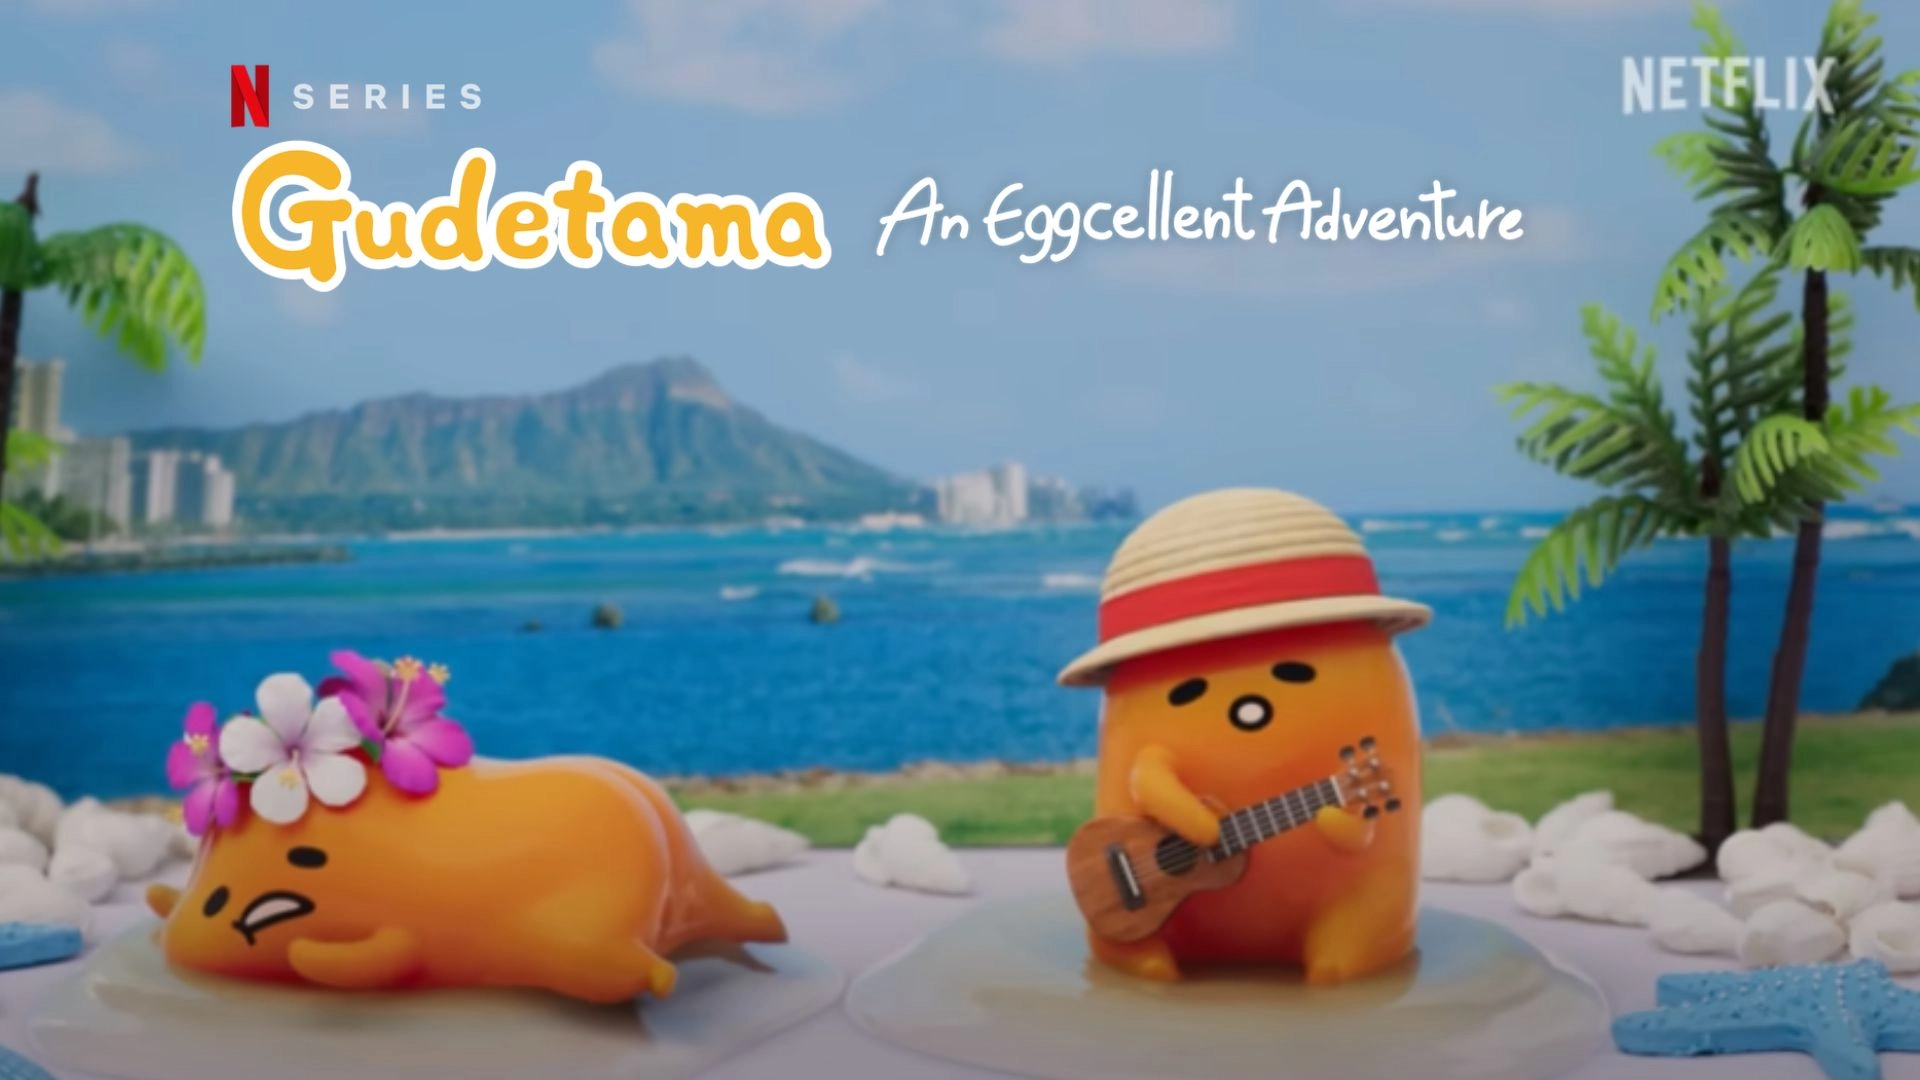 Gudetama: An Eggcellent Adventure Parents Guide